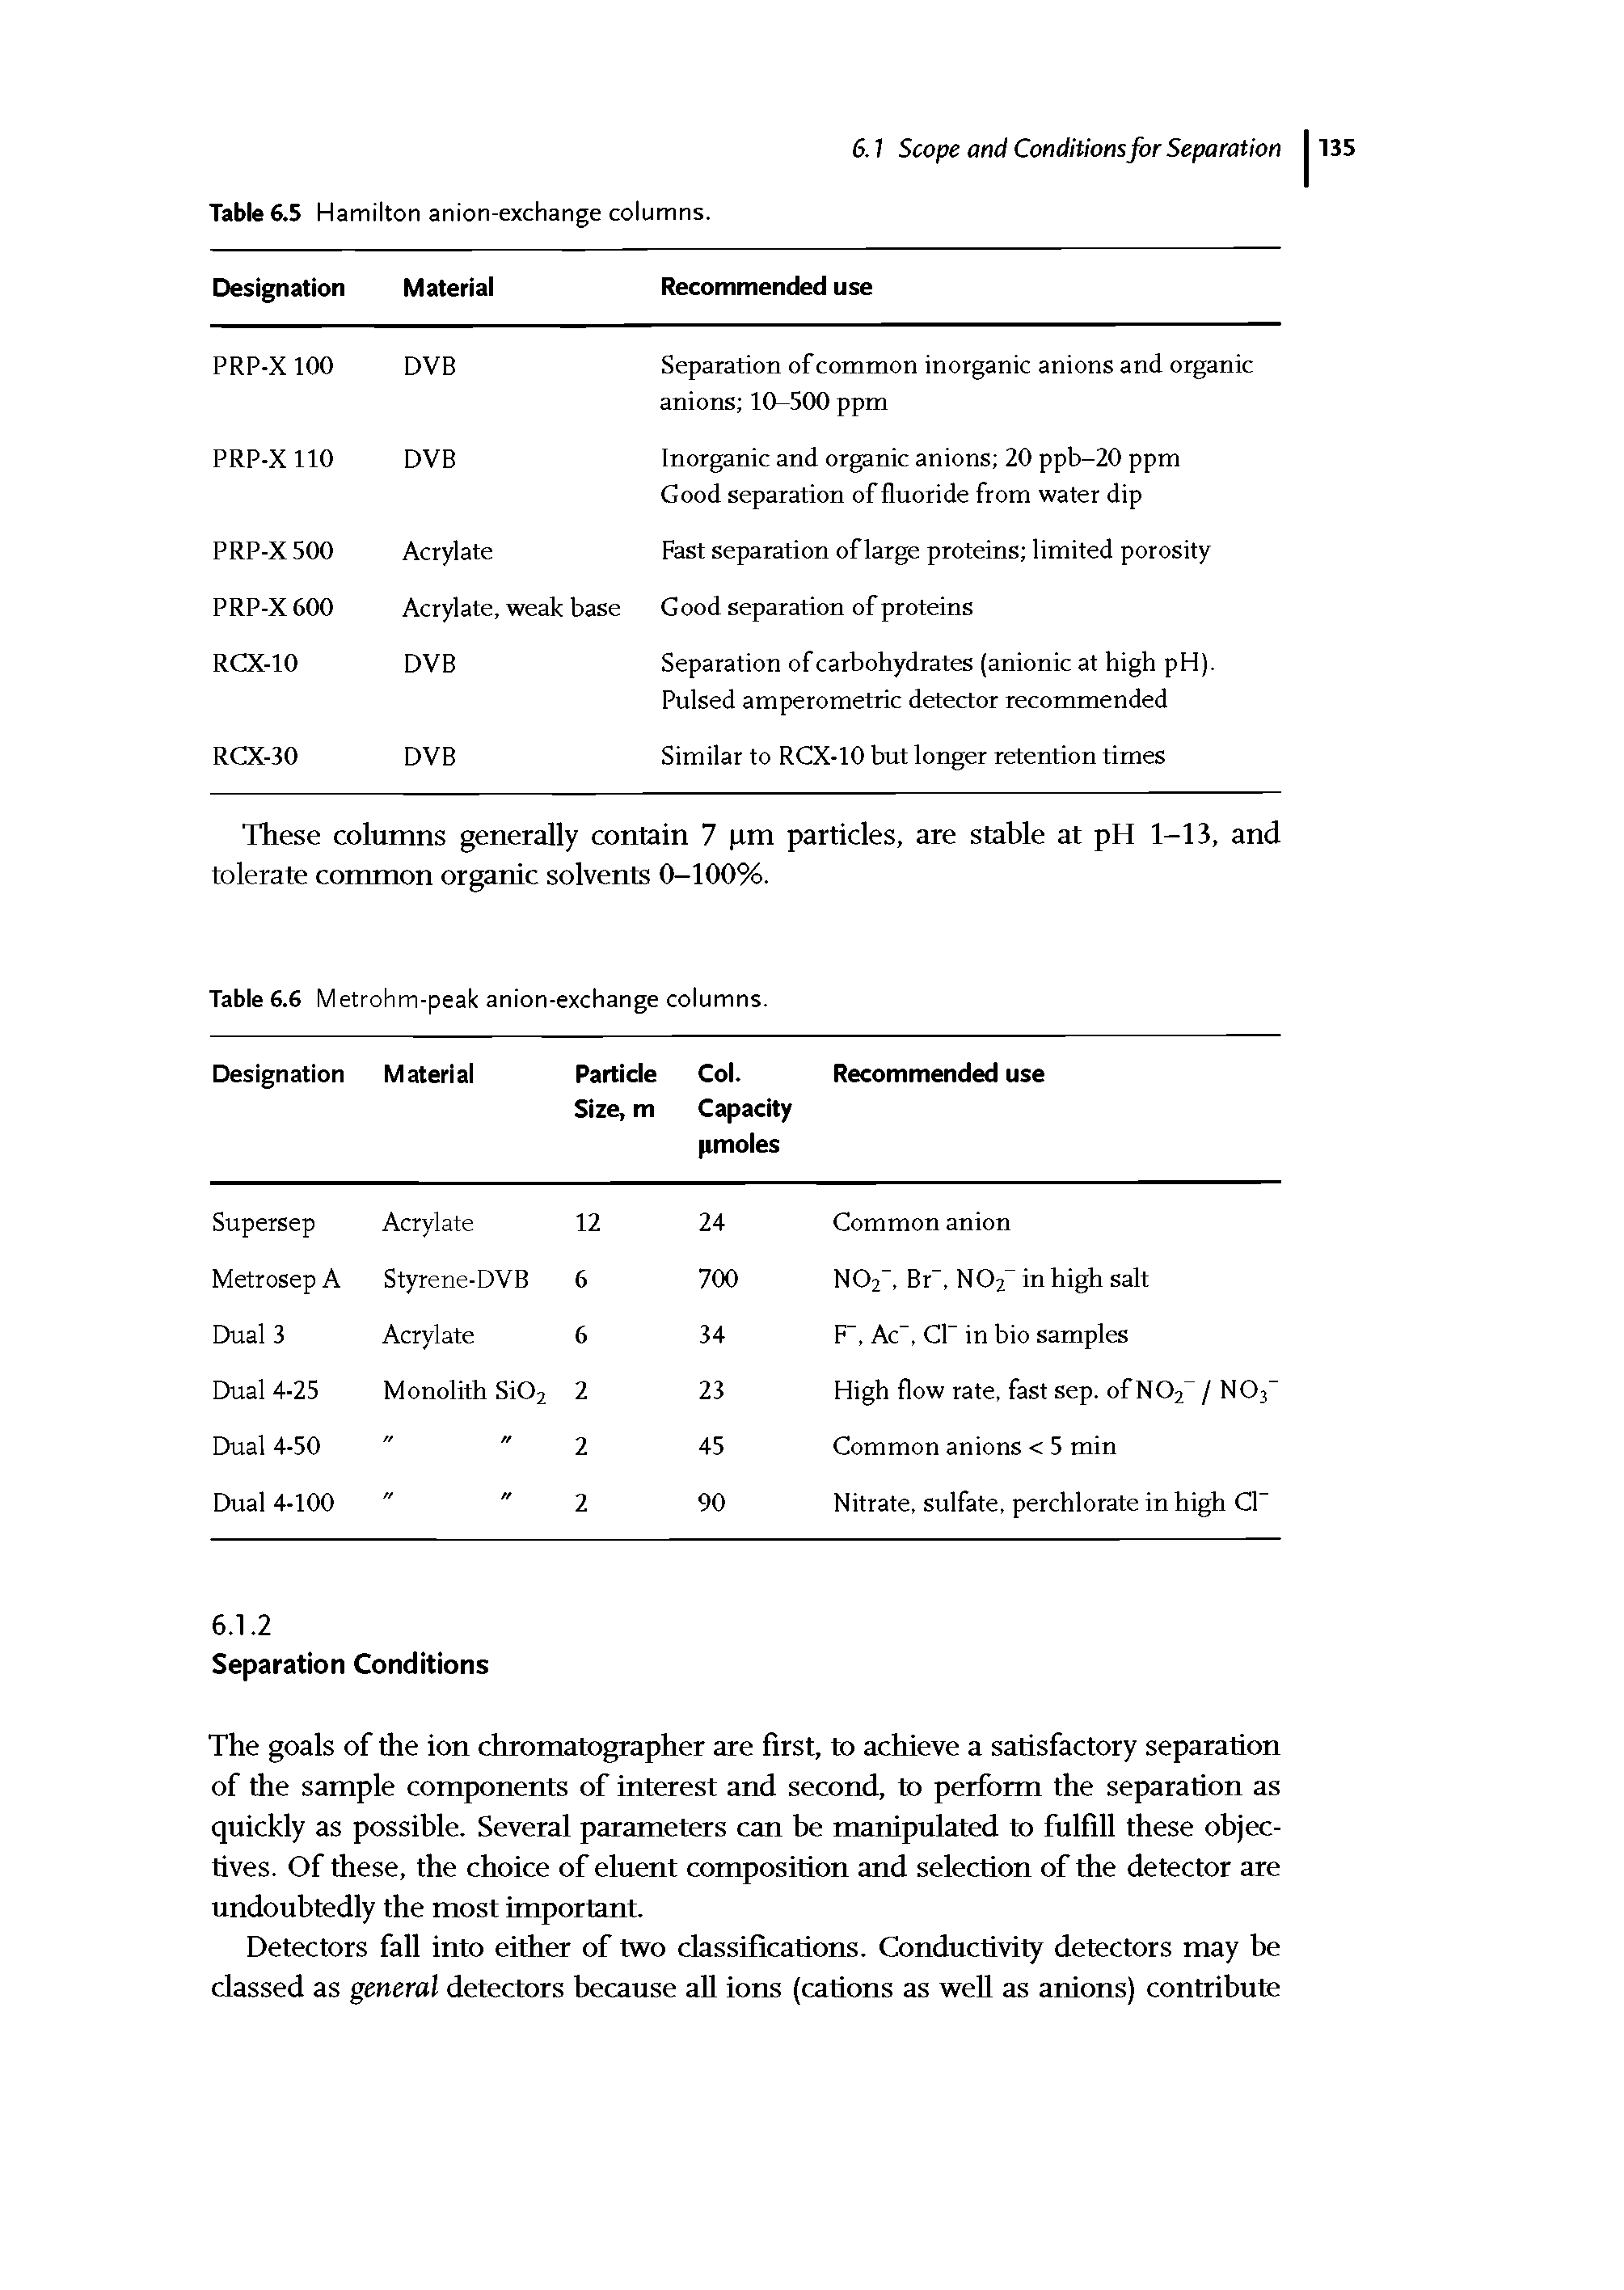 Table 6.6 Metrohm-peak anion-exchange columns.